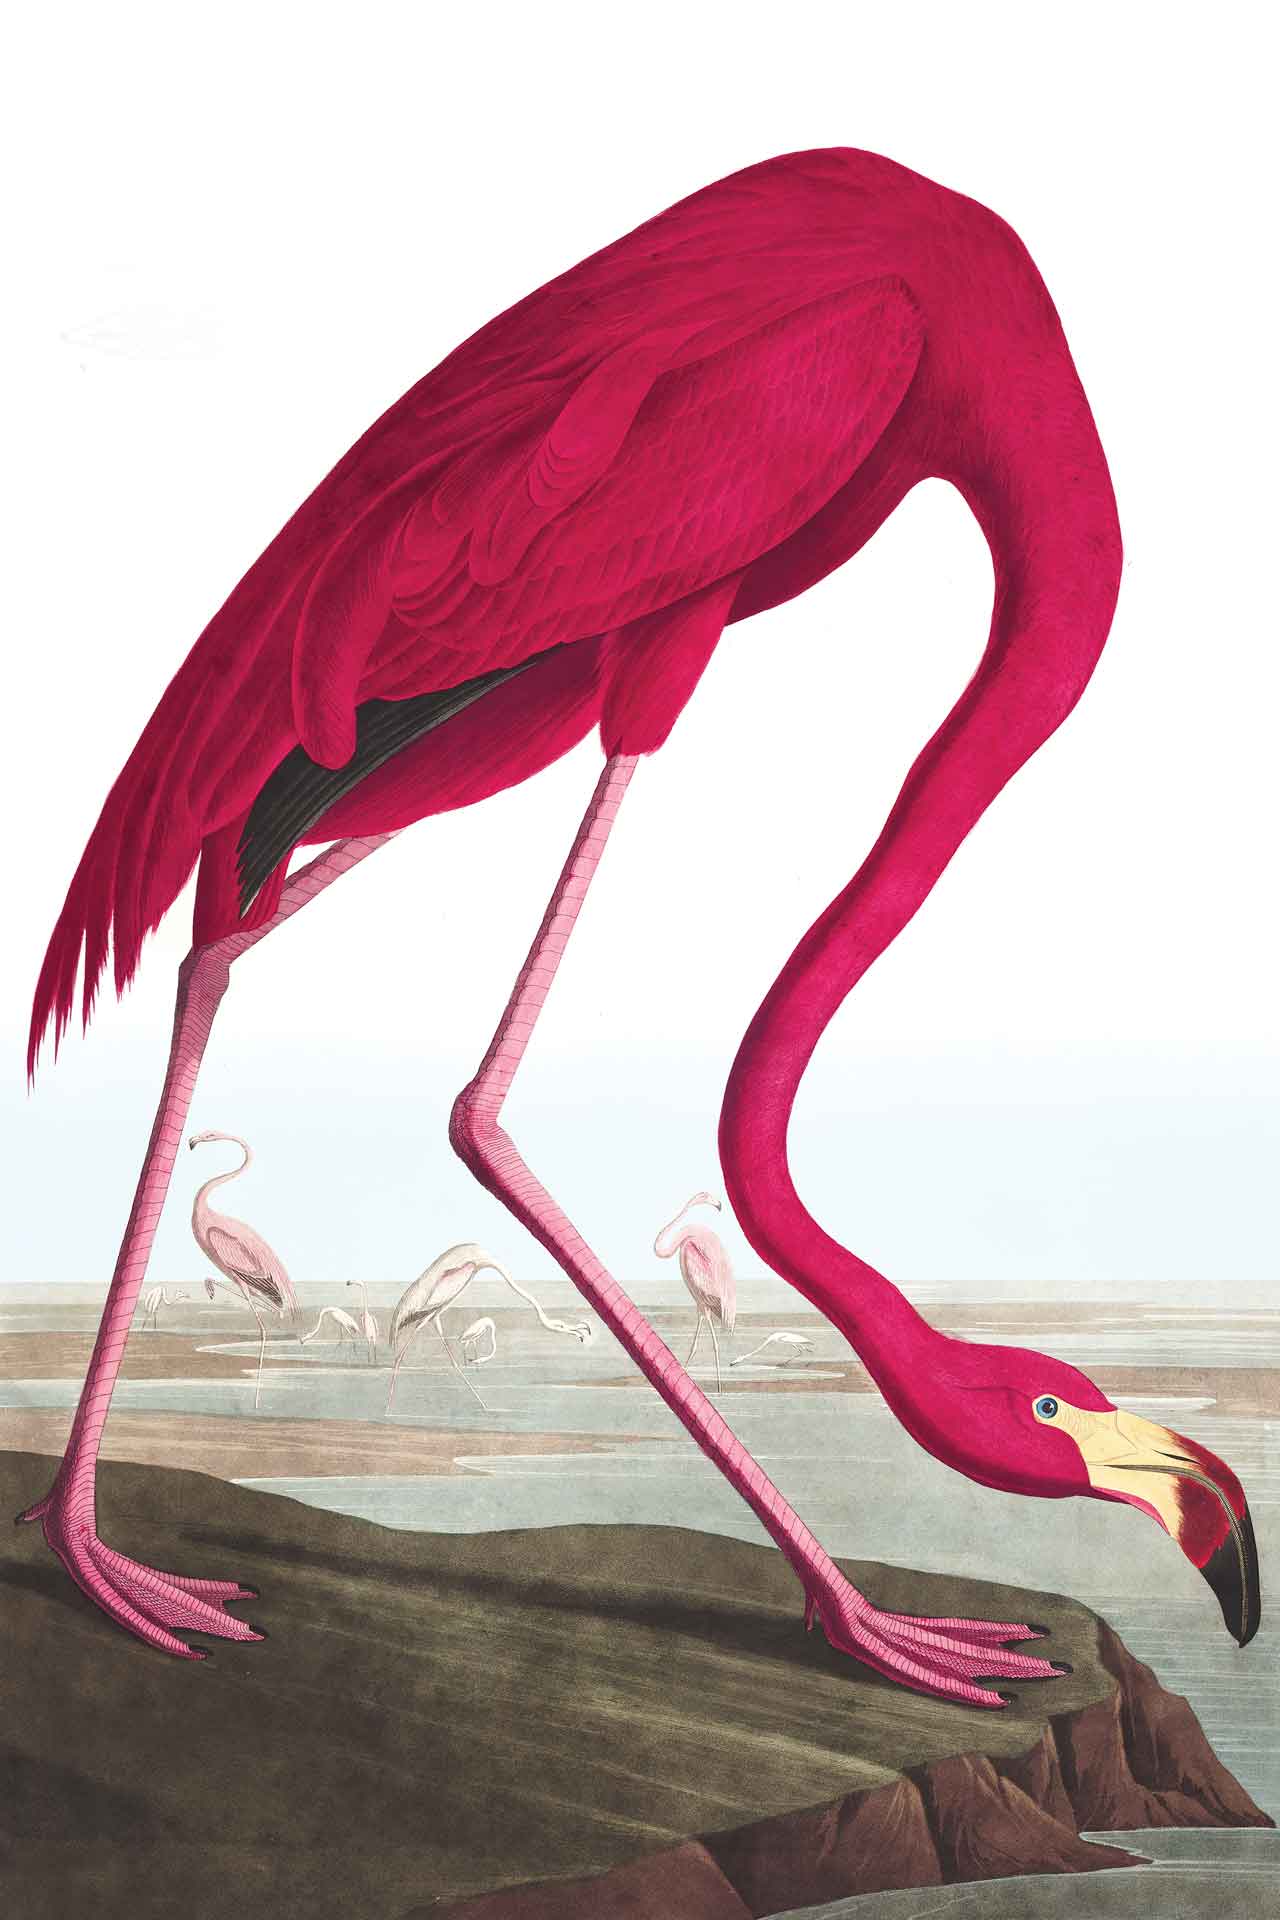 Vintage Flamingo Cara Saven Wall Design Usa